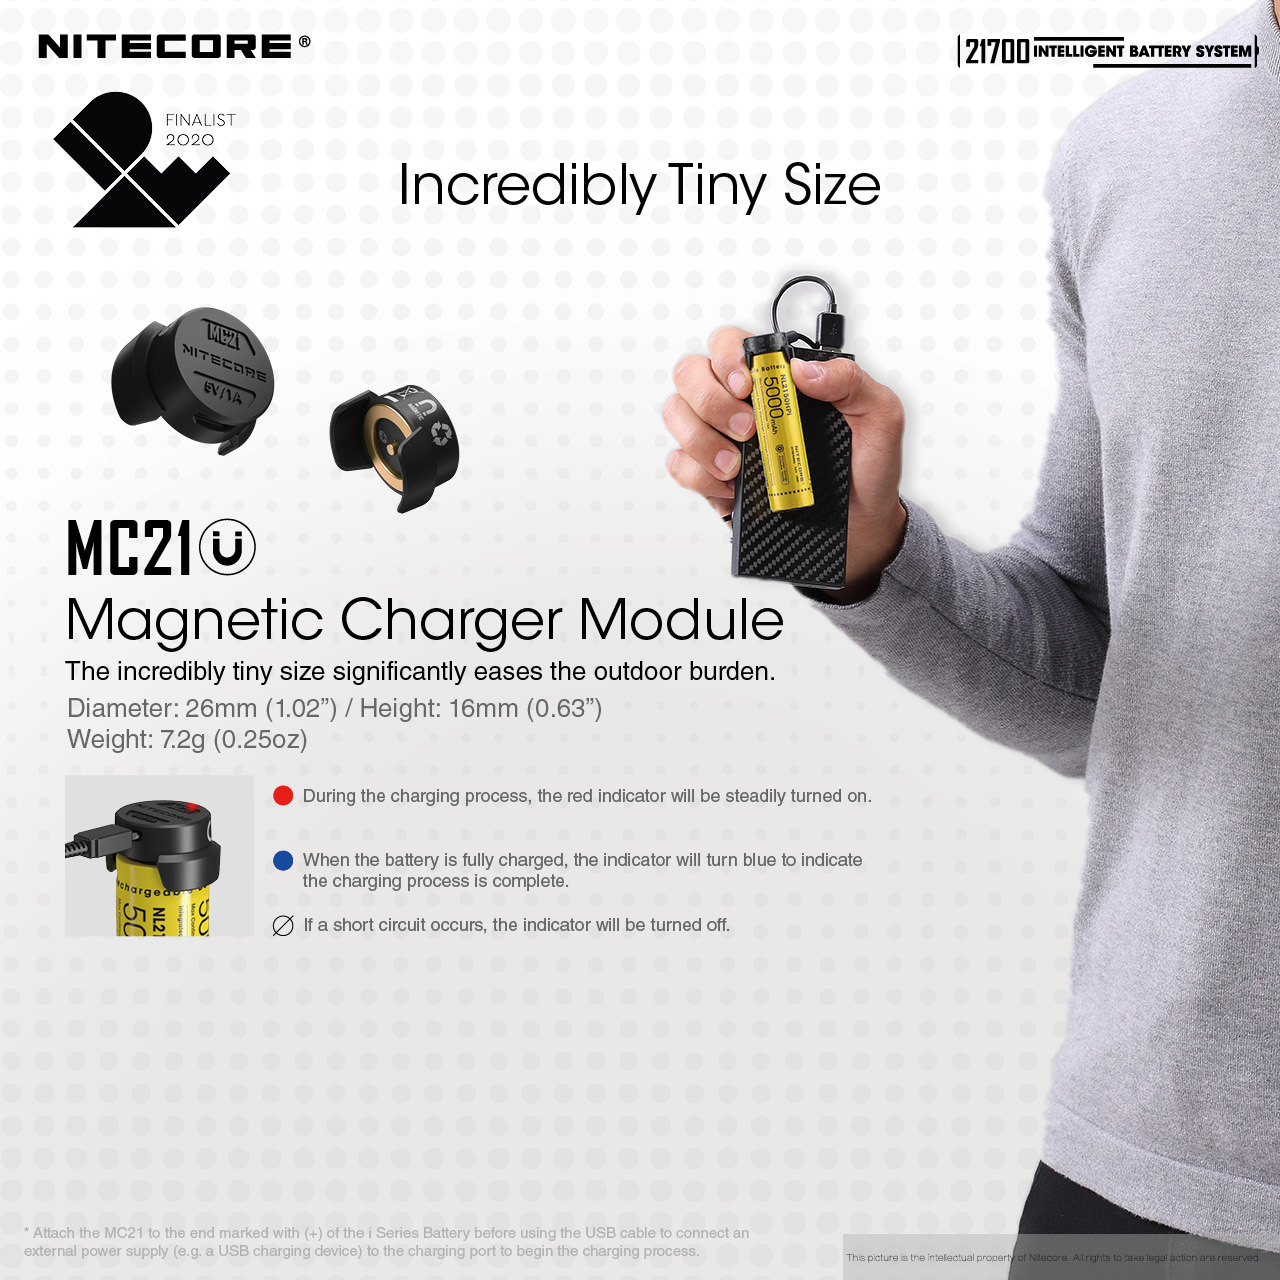 NiteCore 21700 Intelligent Battery System